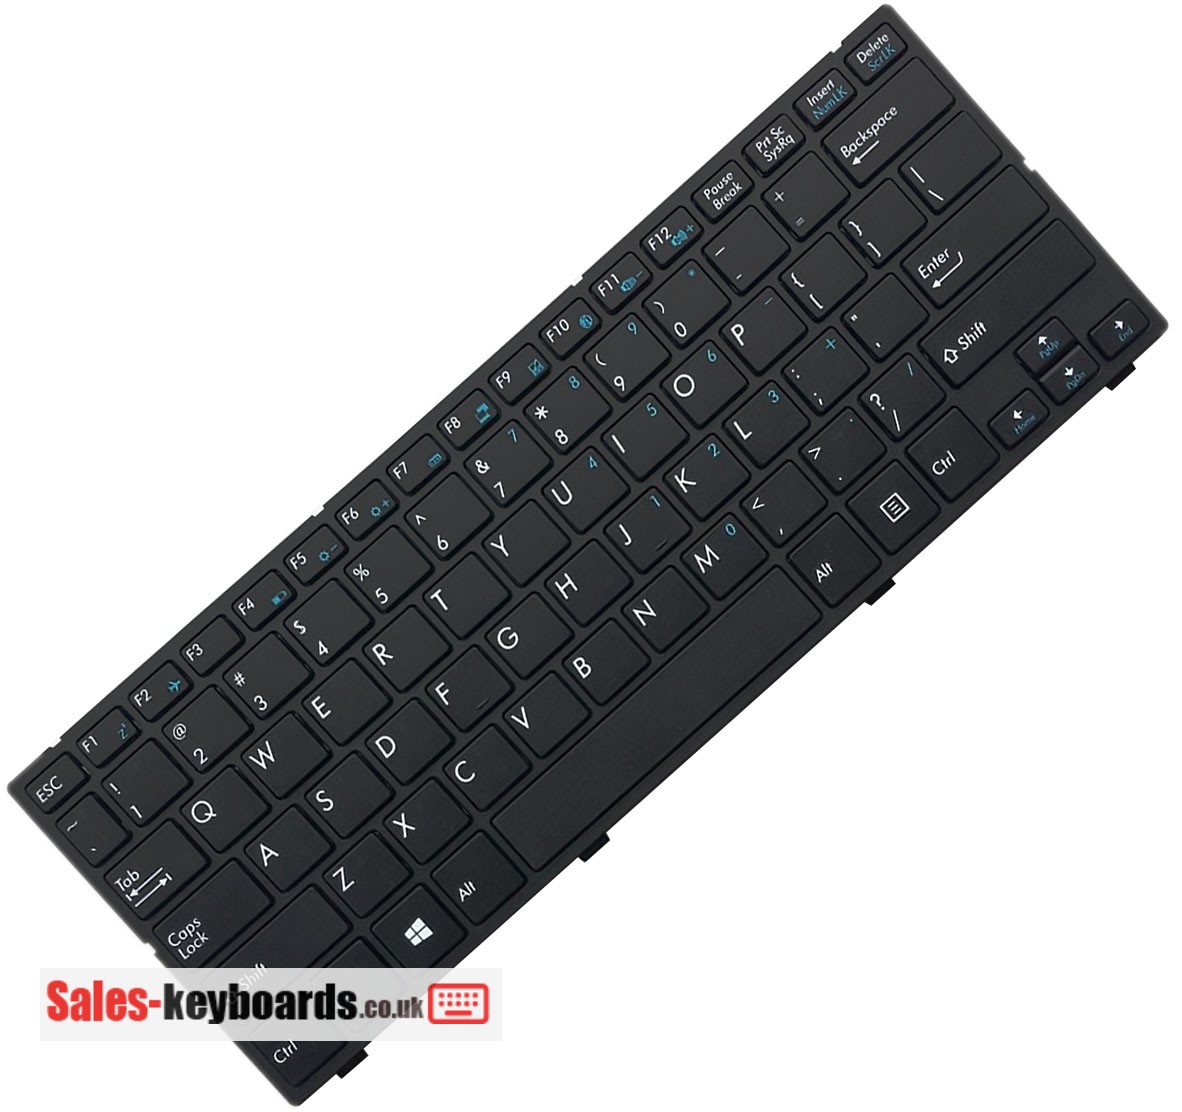 Medion Pegatron T11 Keyboard replacement